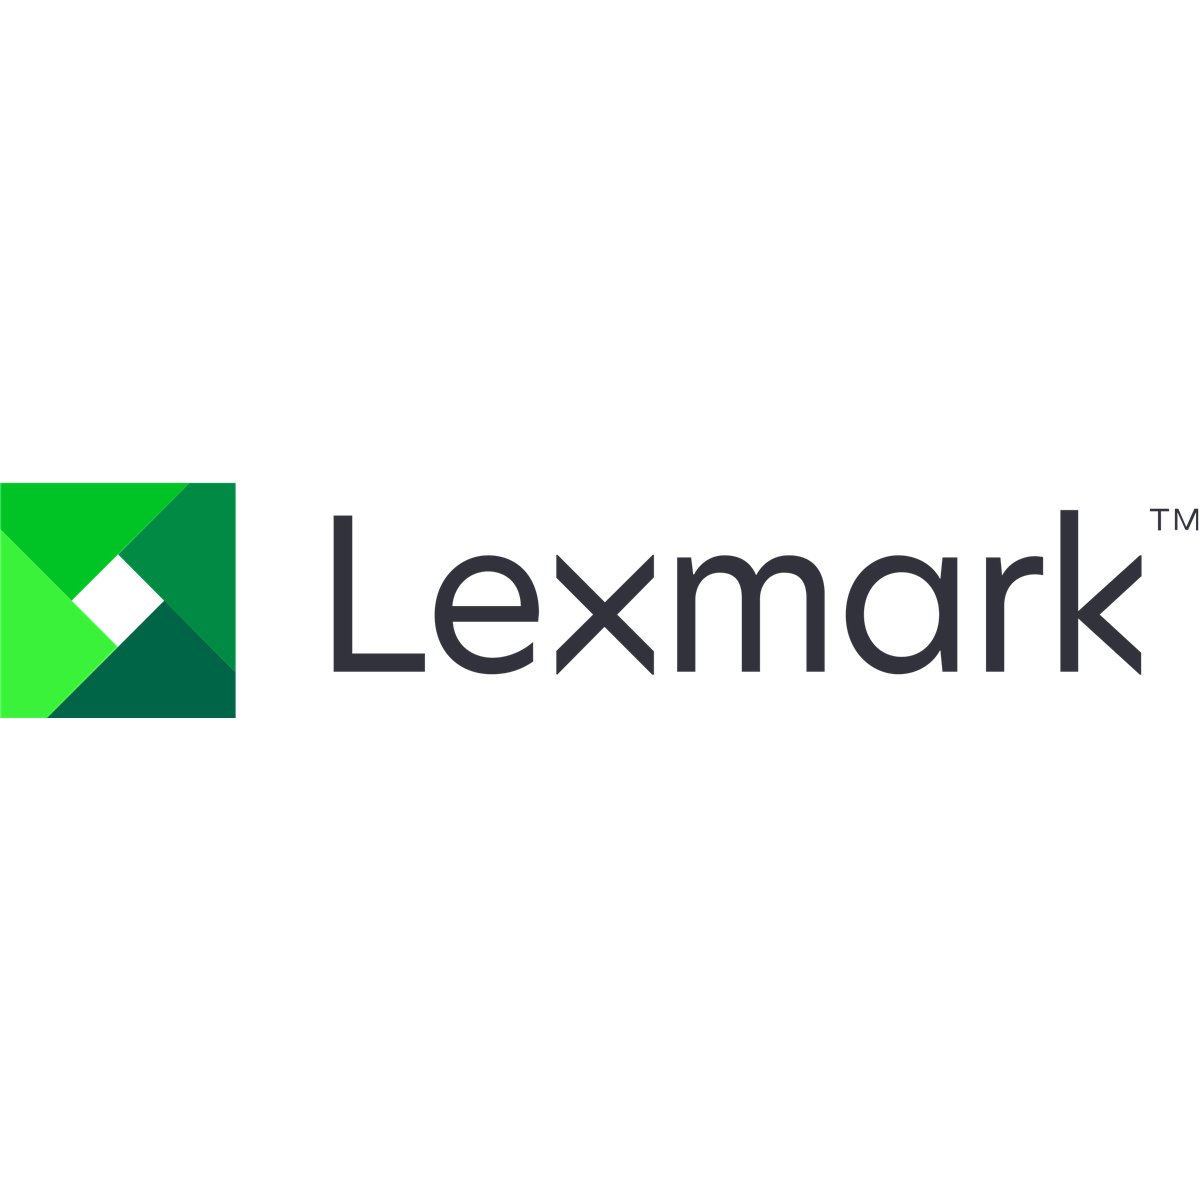 Lexmark Hard Disk ATA pass through fun